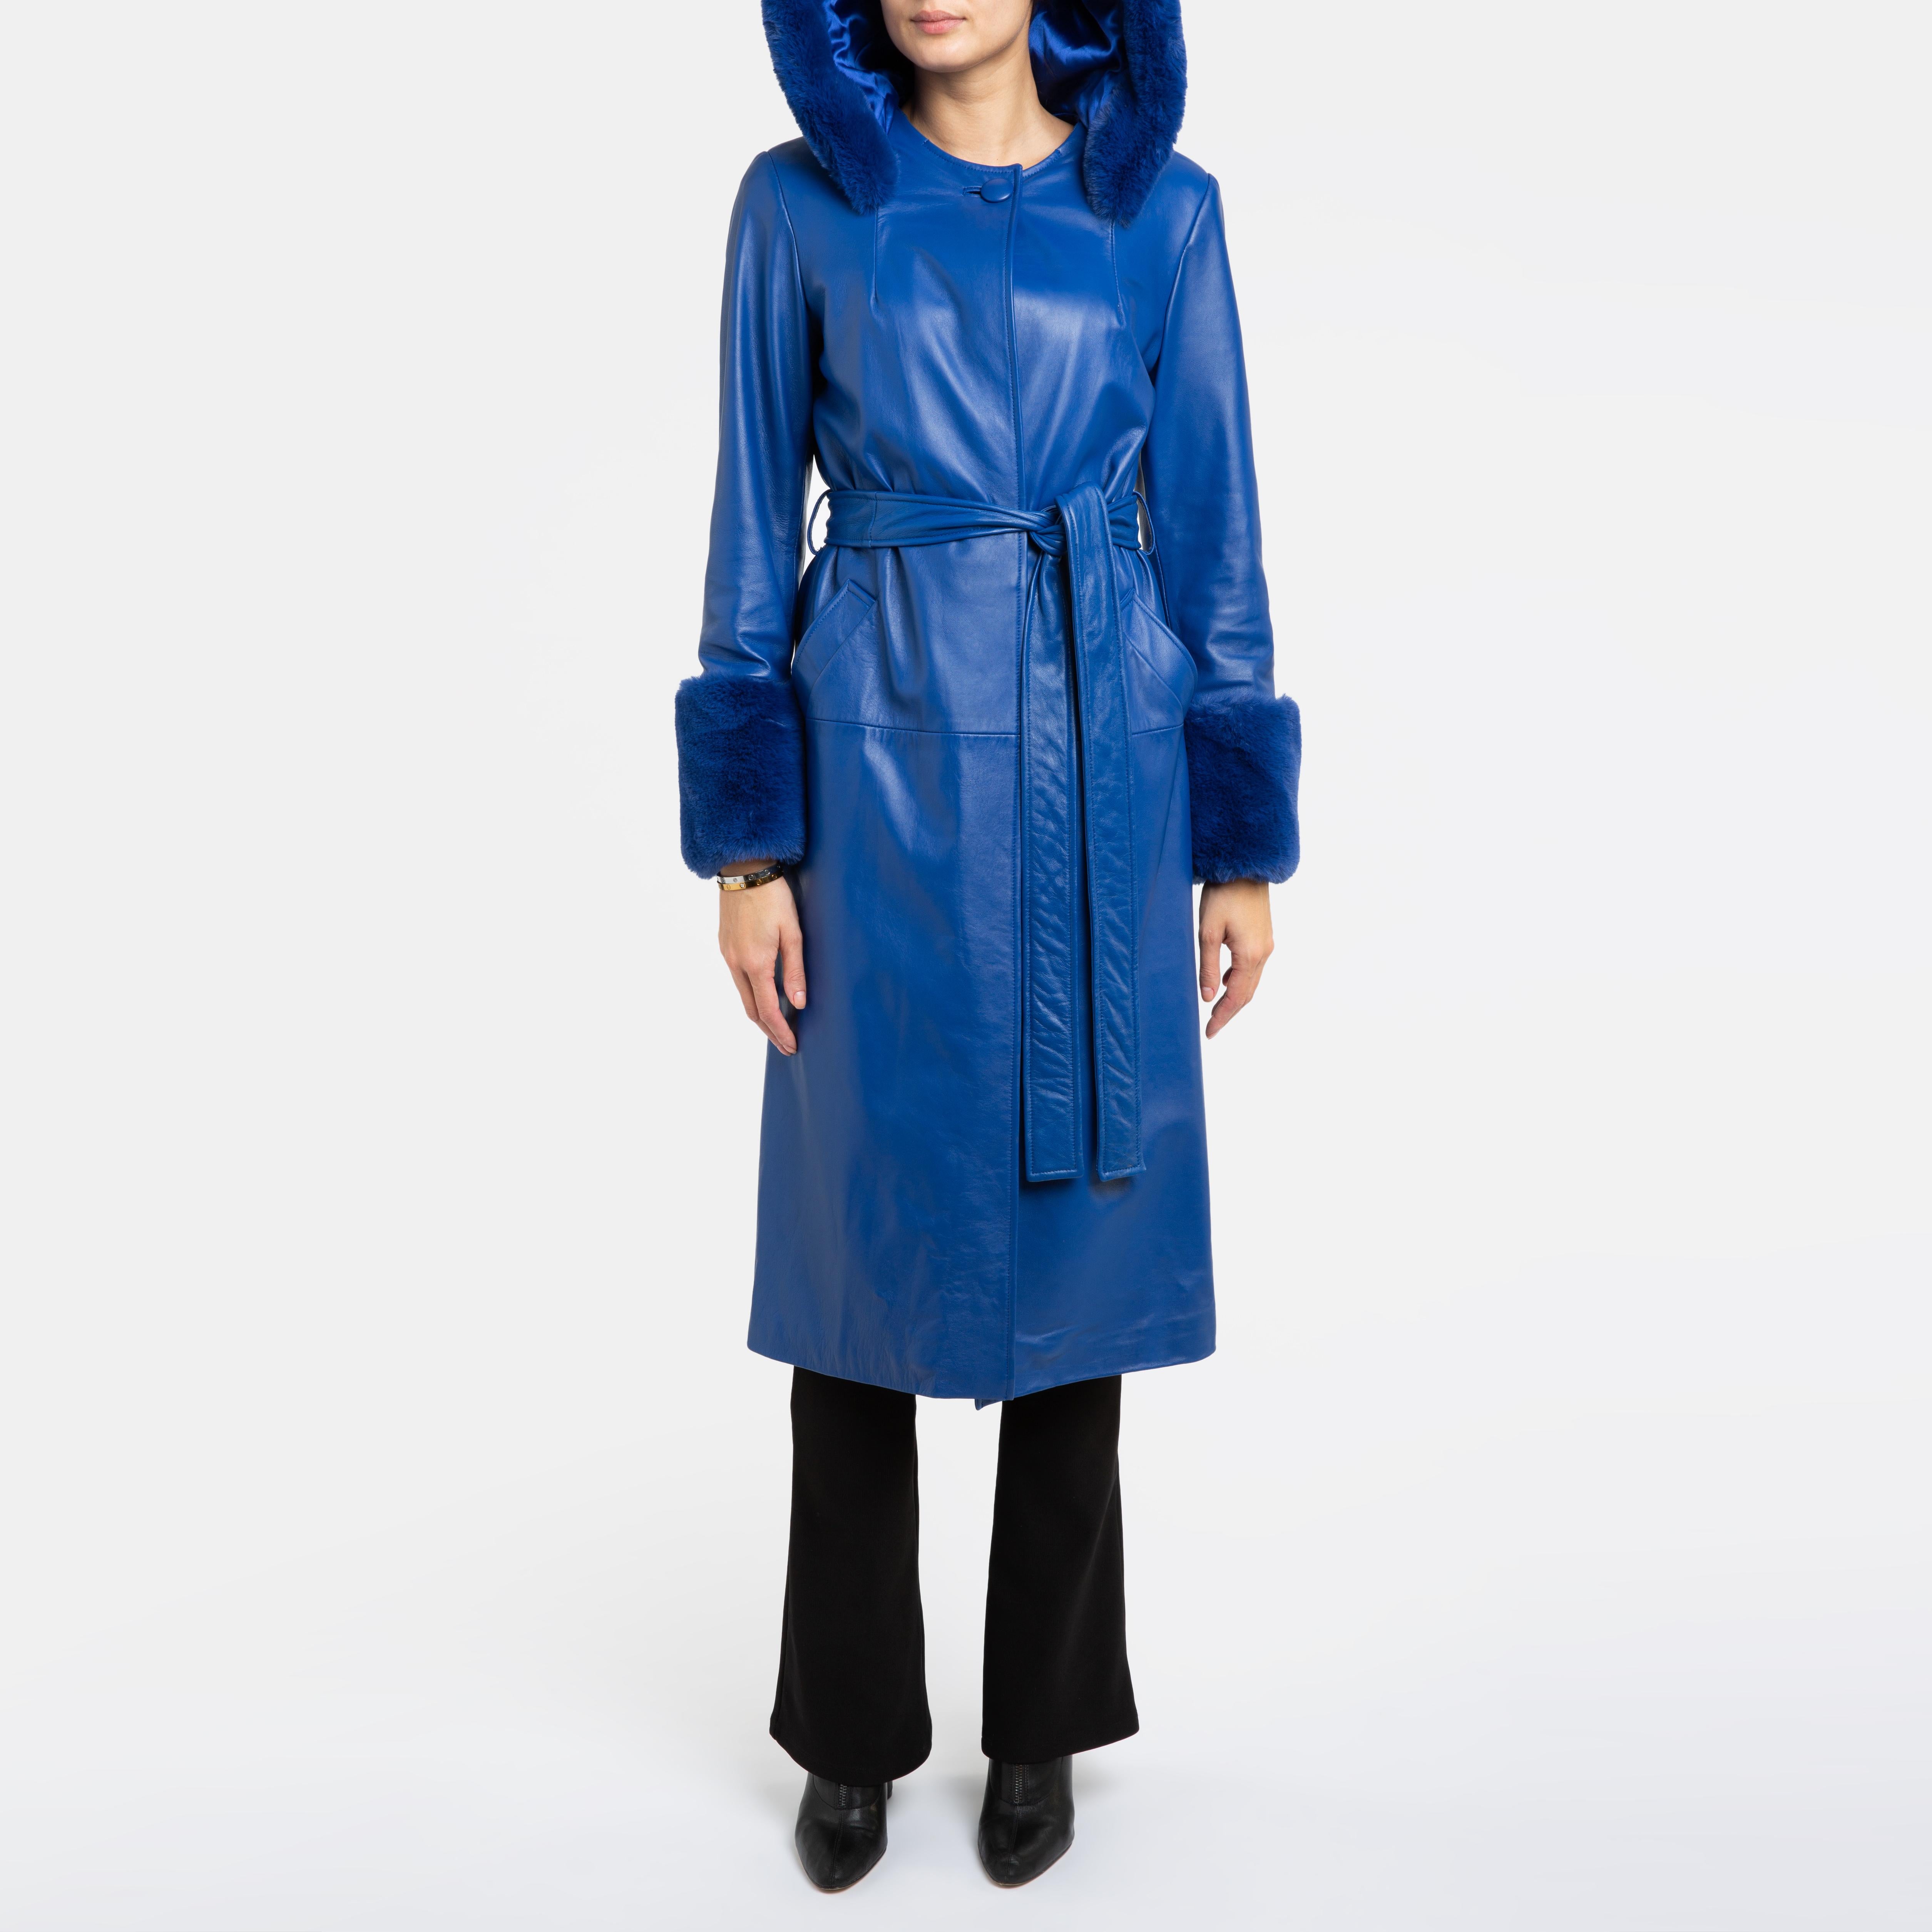 Women's Verheyen London Hooded Leather Trench Coat in Blue with Faux Fur - Size uk 8 